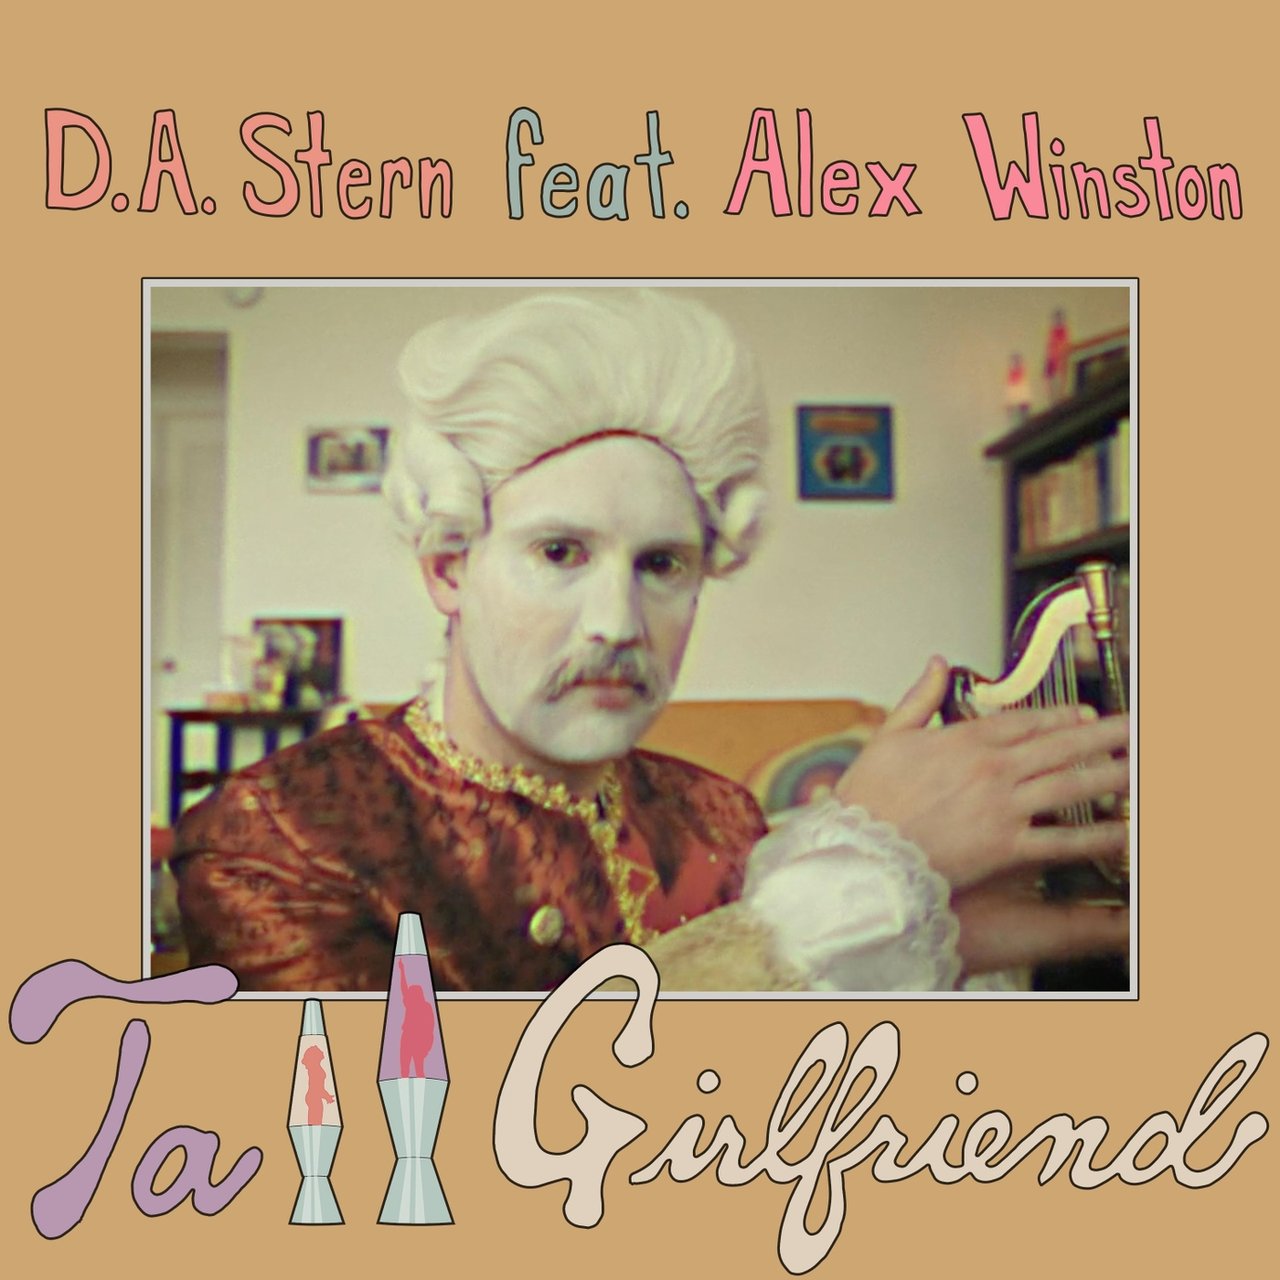 D. A. Stern ft. featuring Alex Winston Tall Girlfriend cover artwork